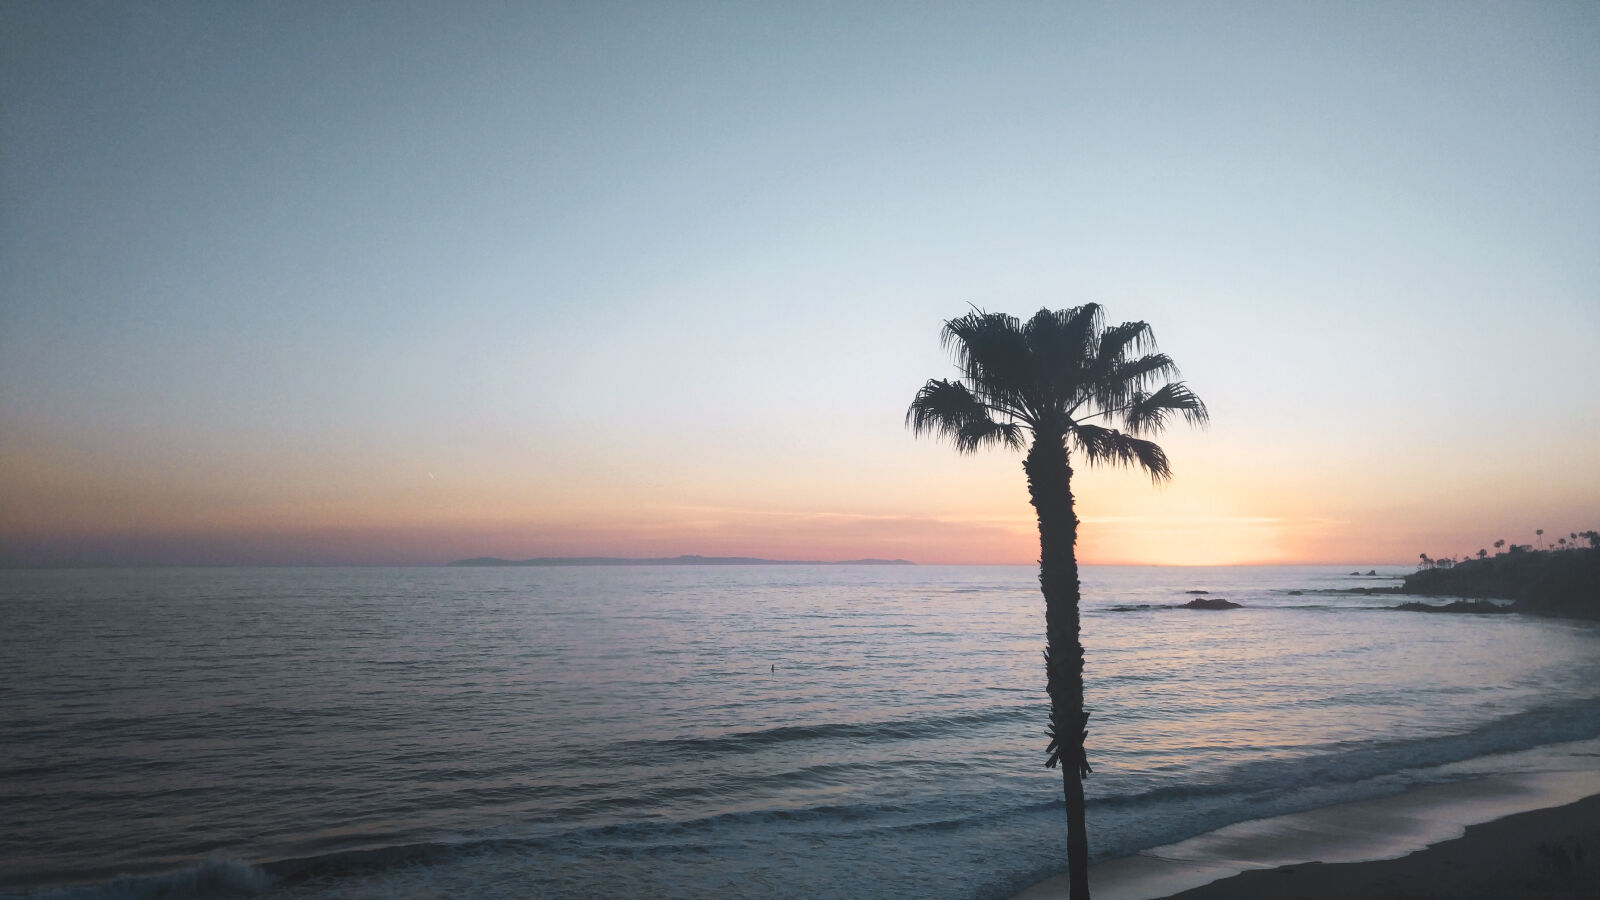 LG V10 sample photo. Beach, ocean, palm, tree photography